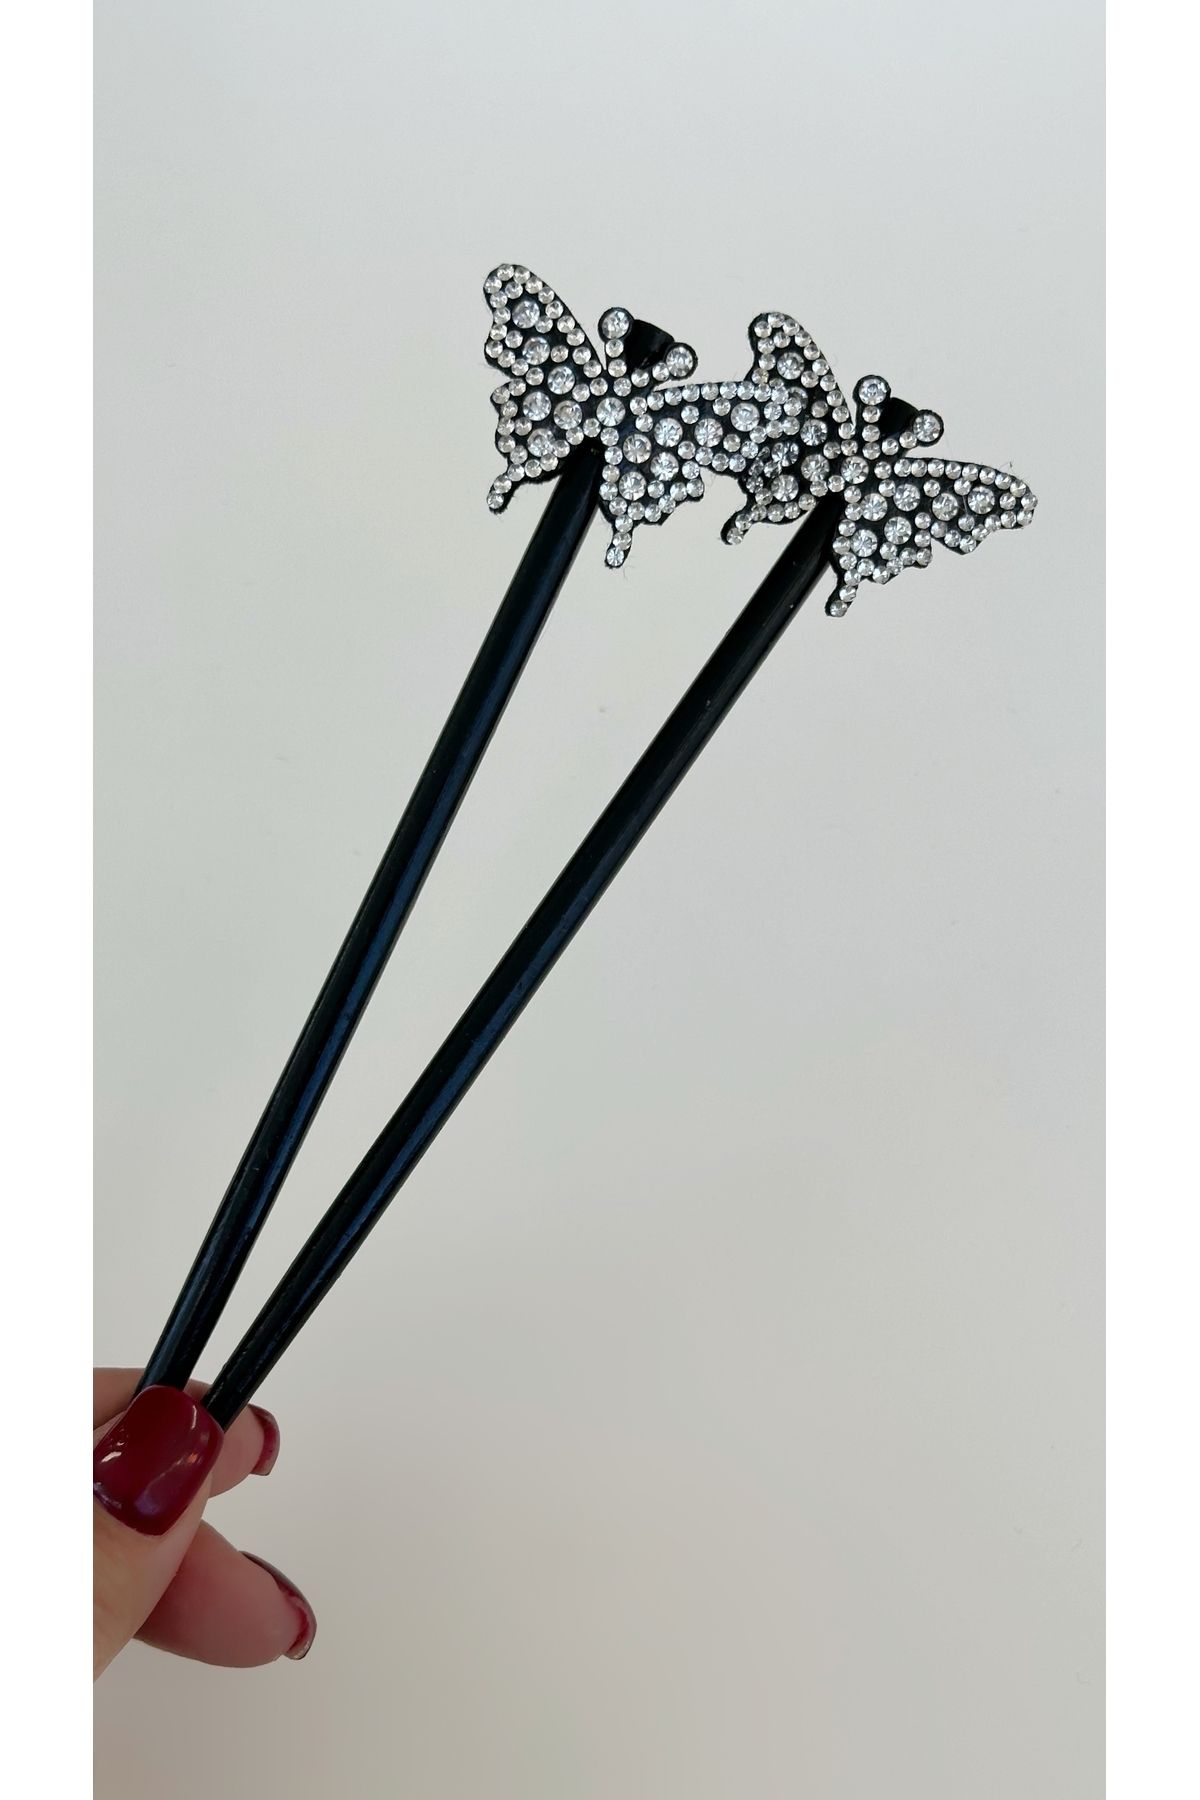 Alâ Atelier taşlı kelebek ikili siyah çubuk topuz tokası kalem toka